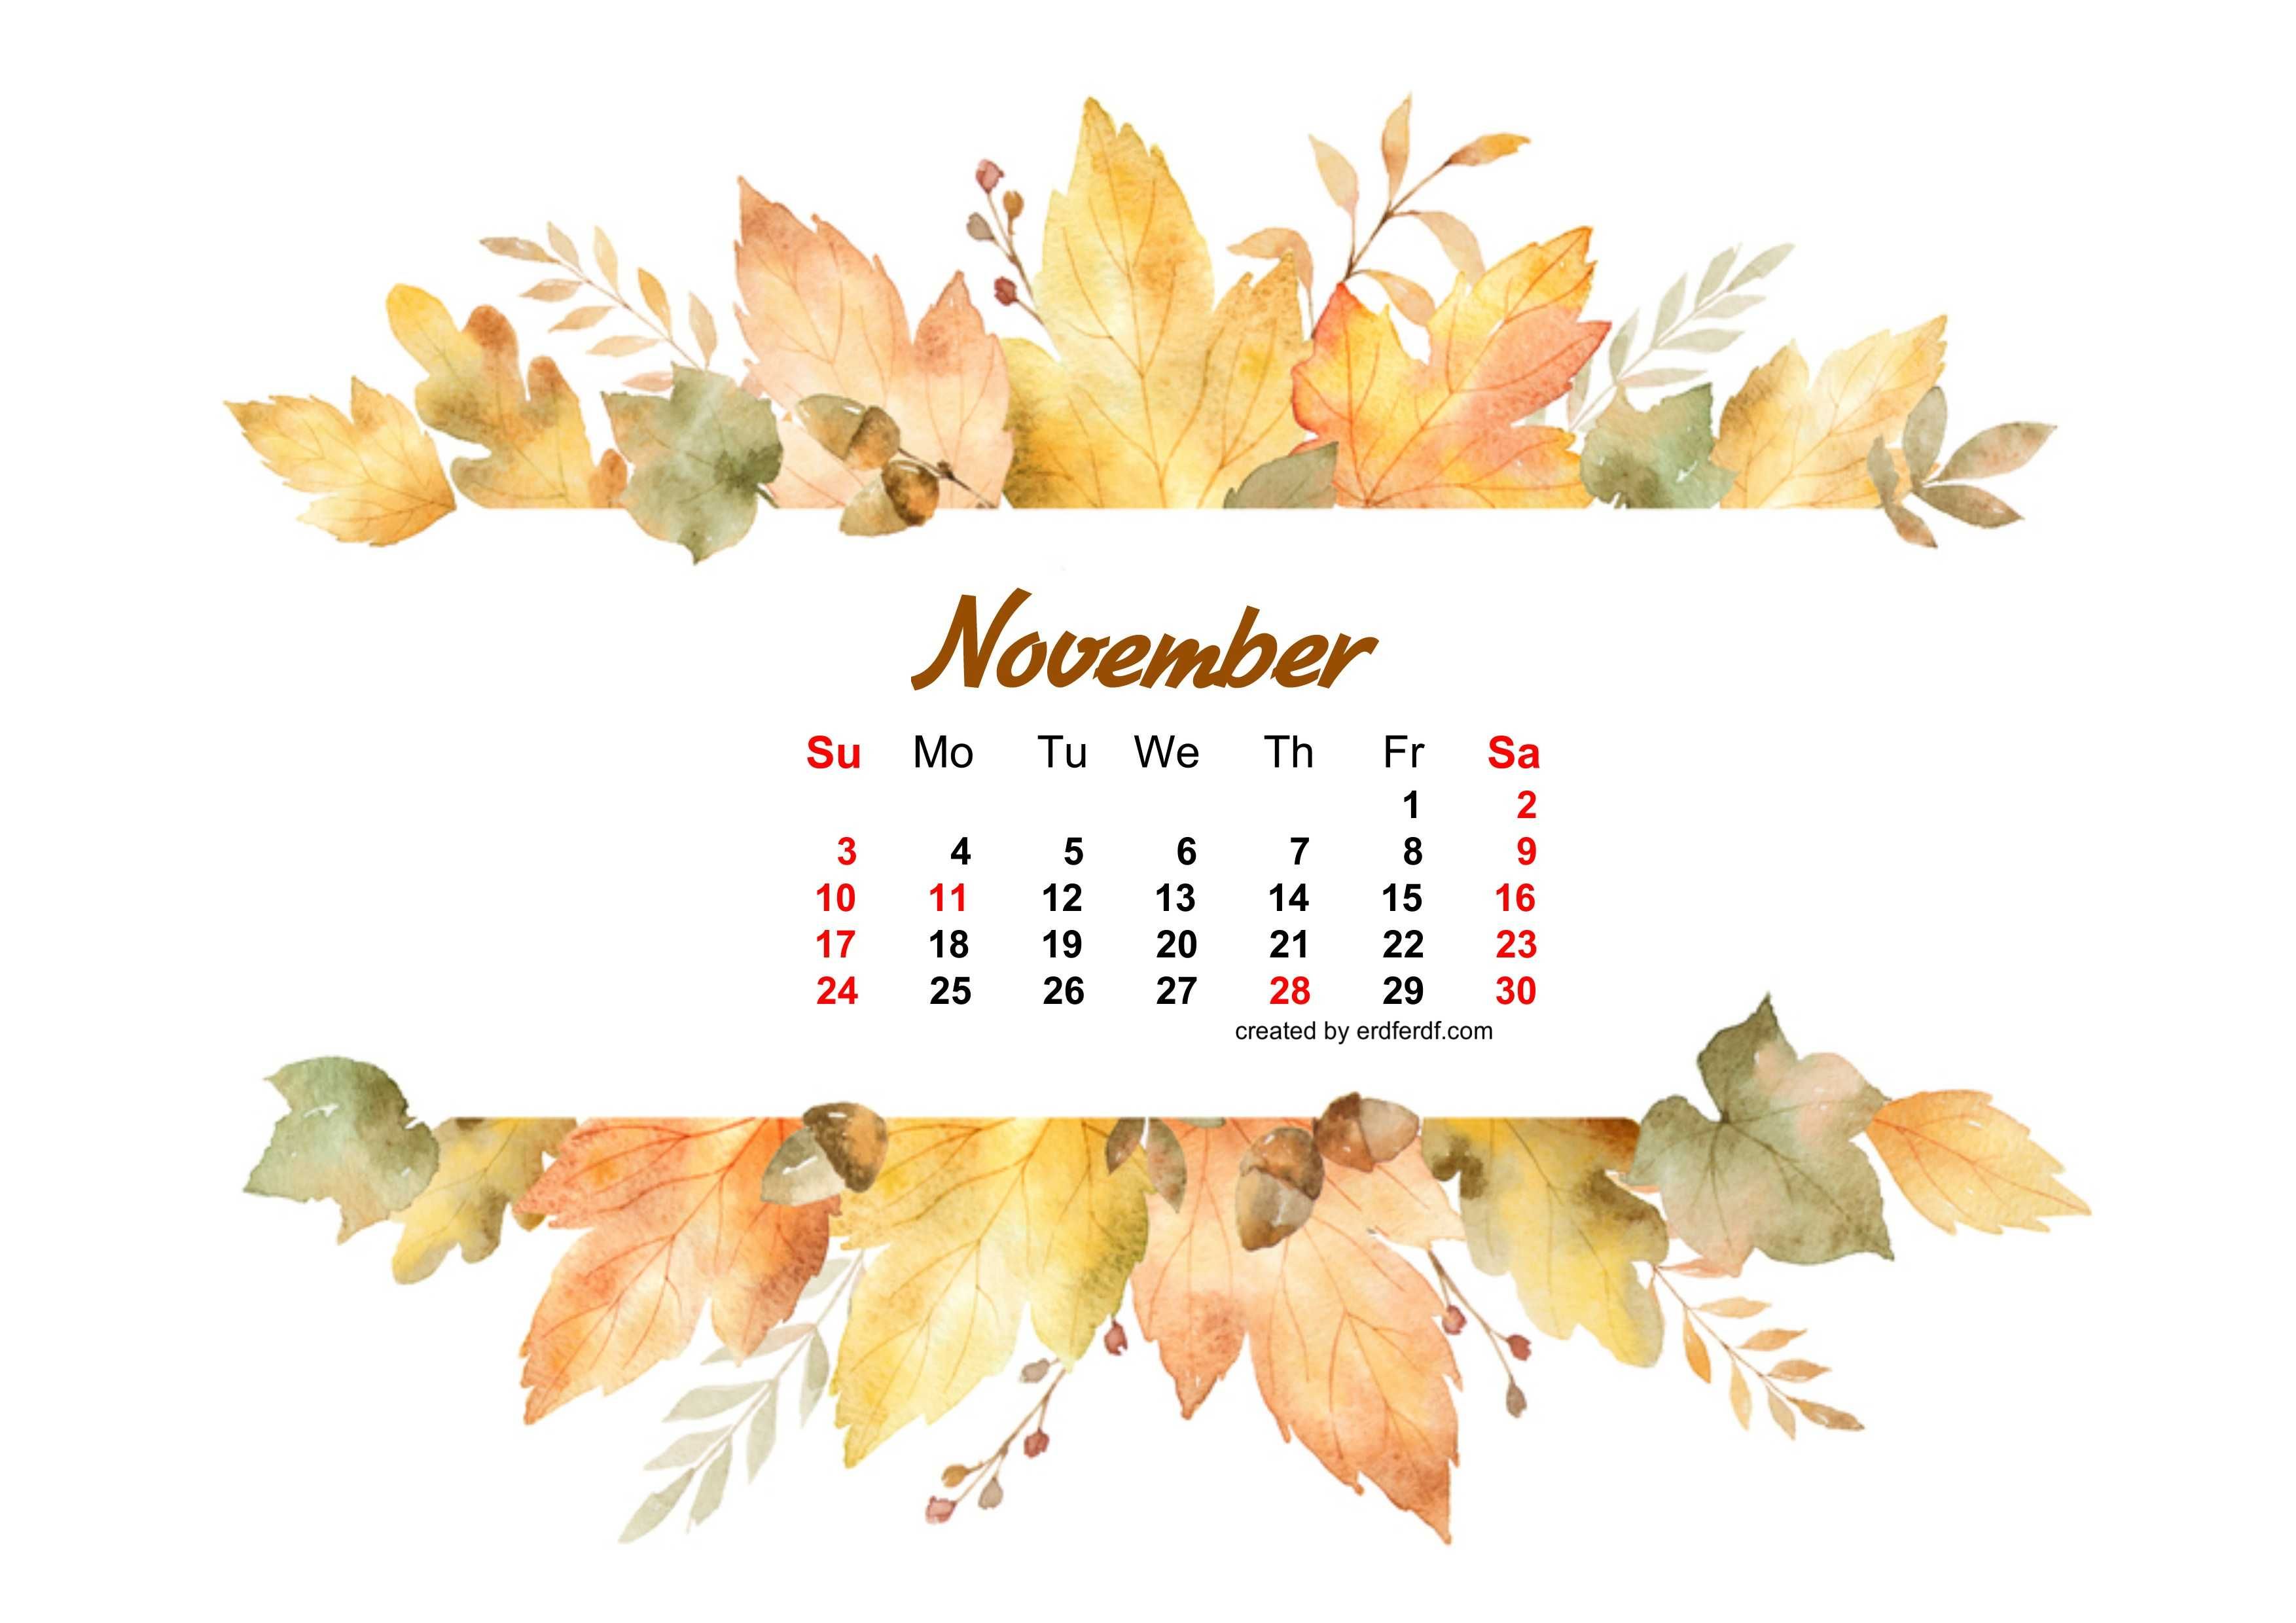 Watercolor Leaf Dried November Calendar Picture Wallpaper In